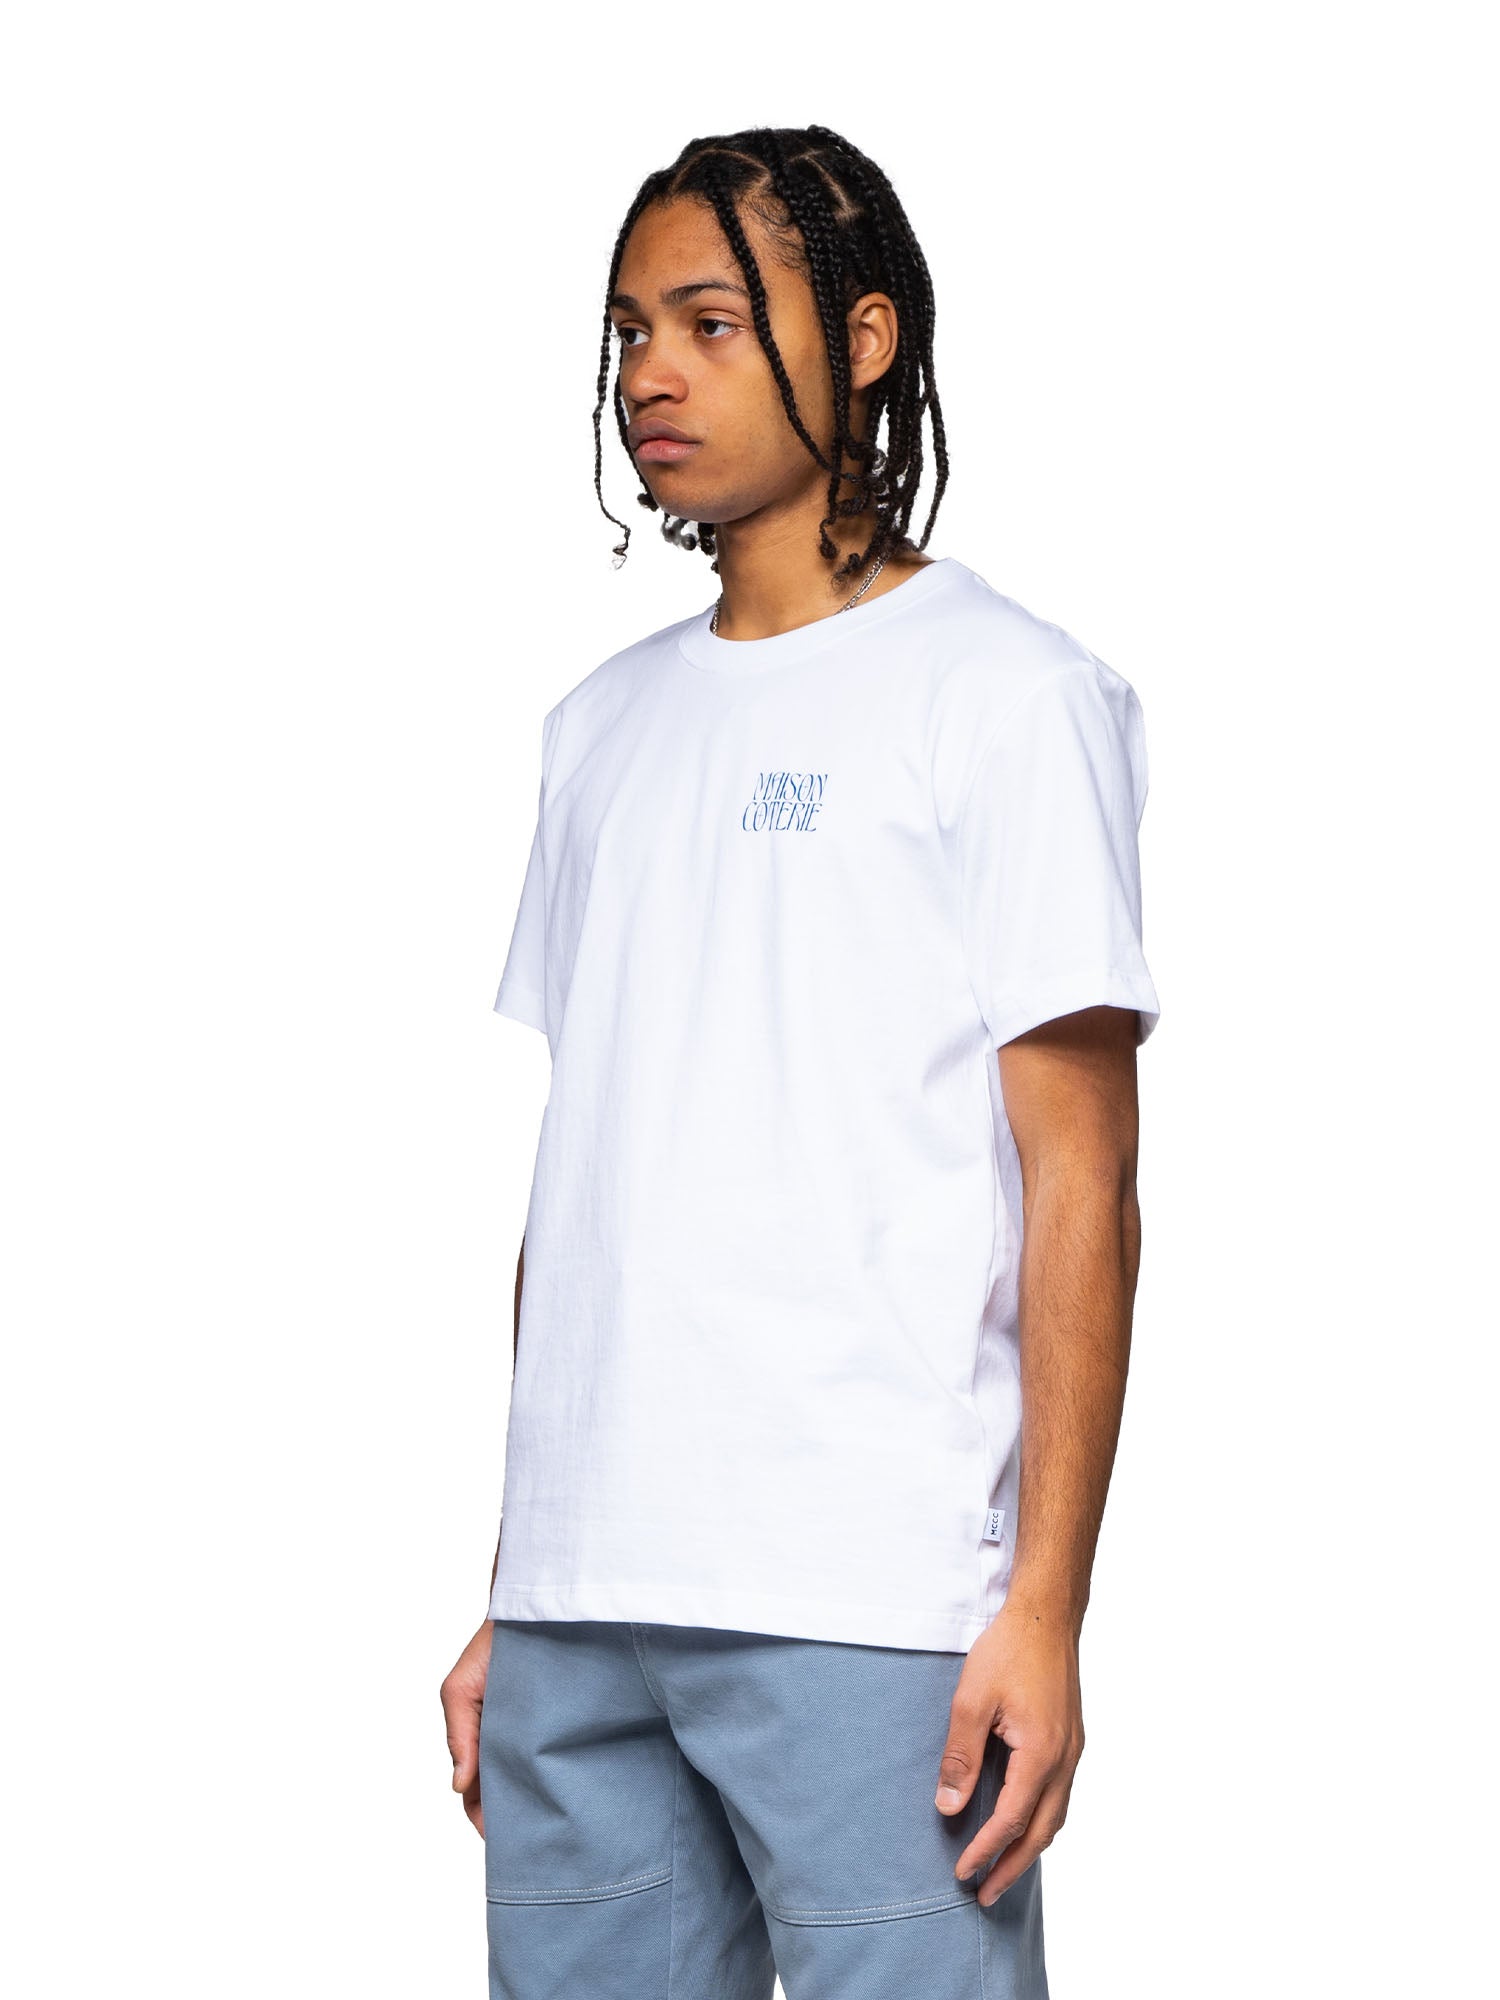 Asher - Graphic T-Shirt - White